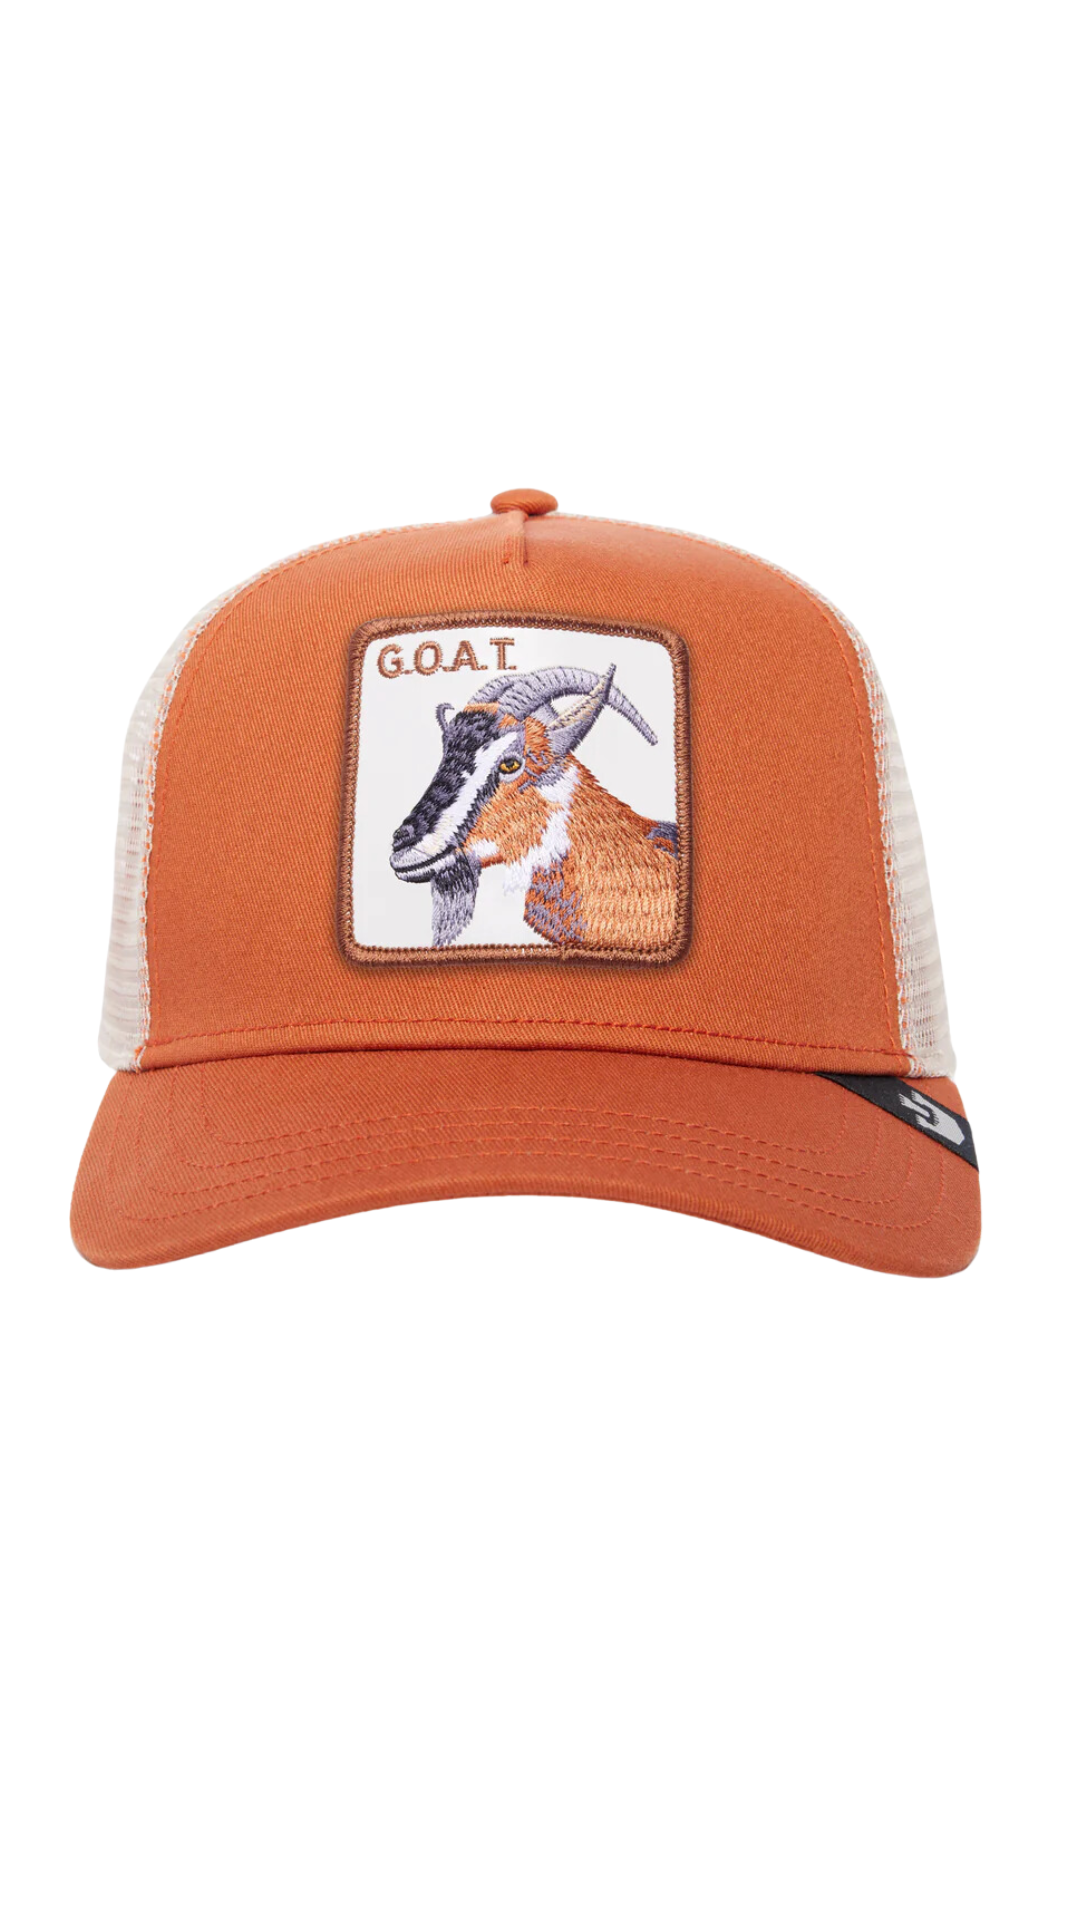 RUS The Goat Hat